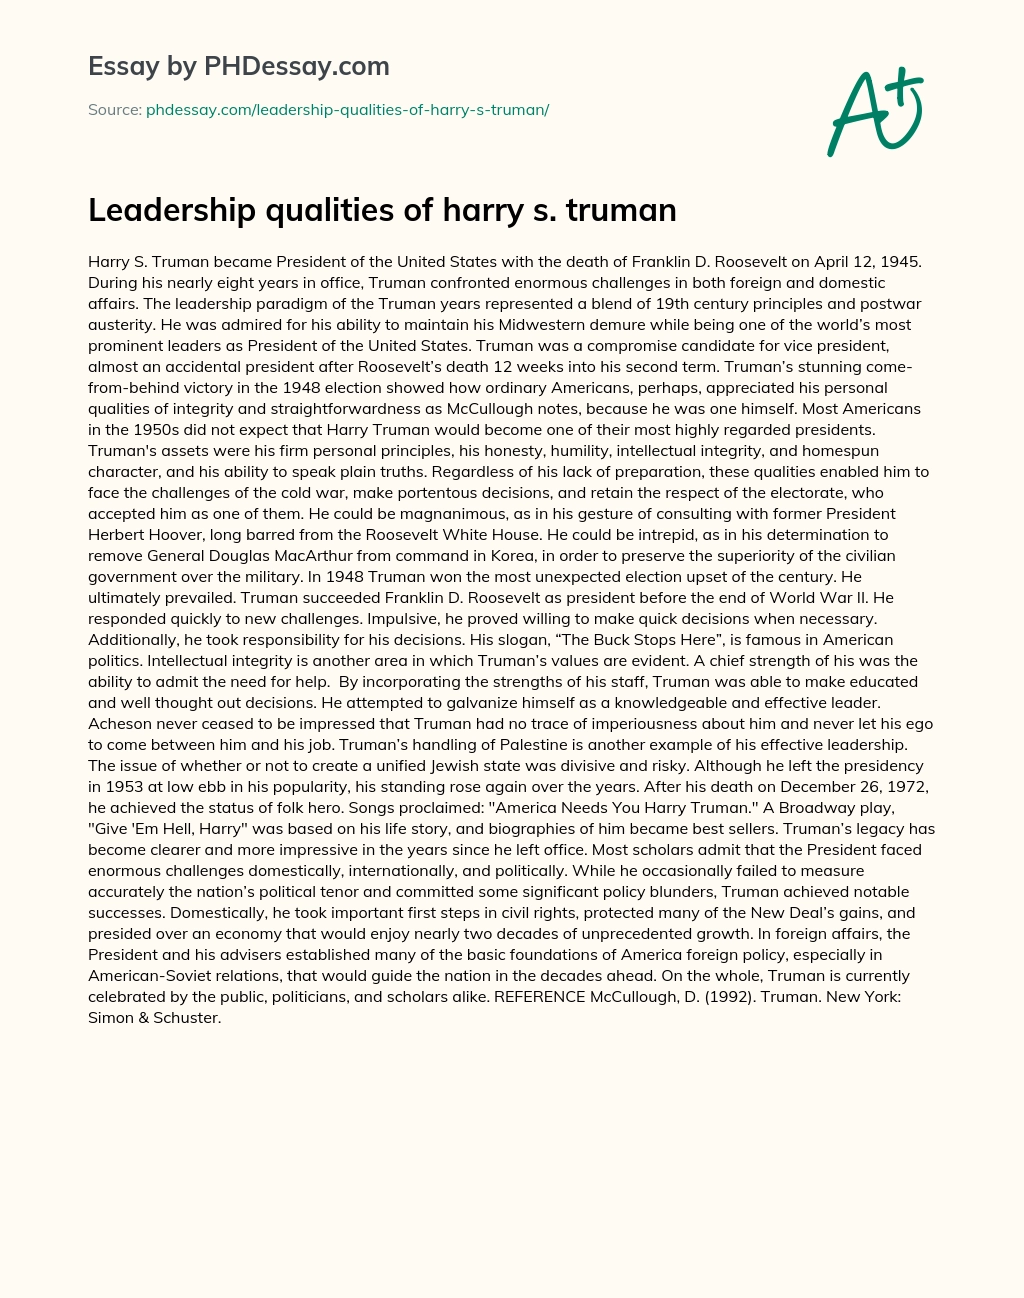 Leadership qualities of harry s. truman essay